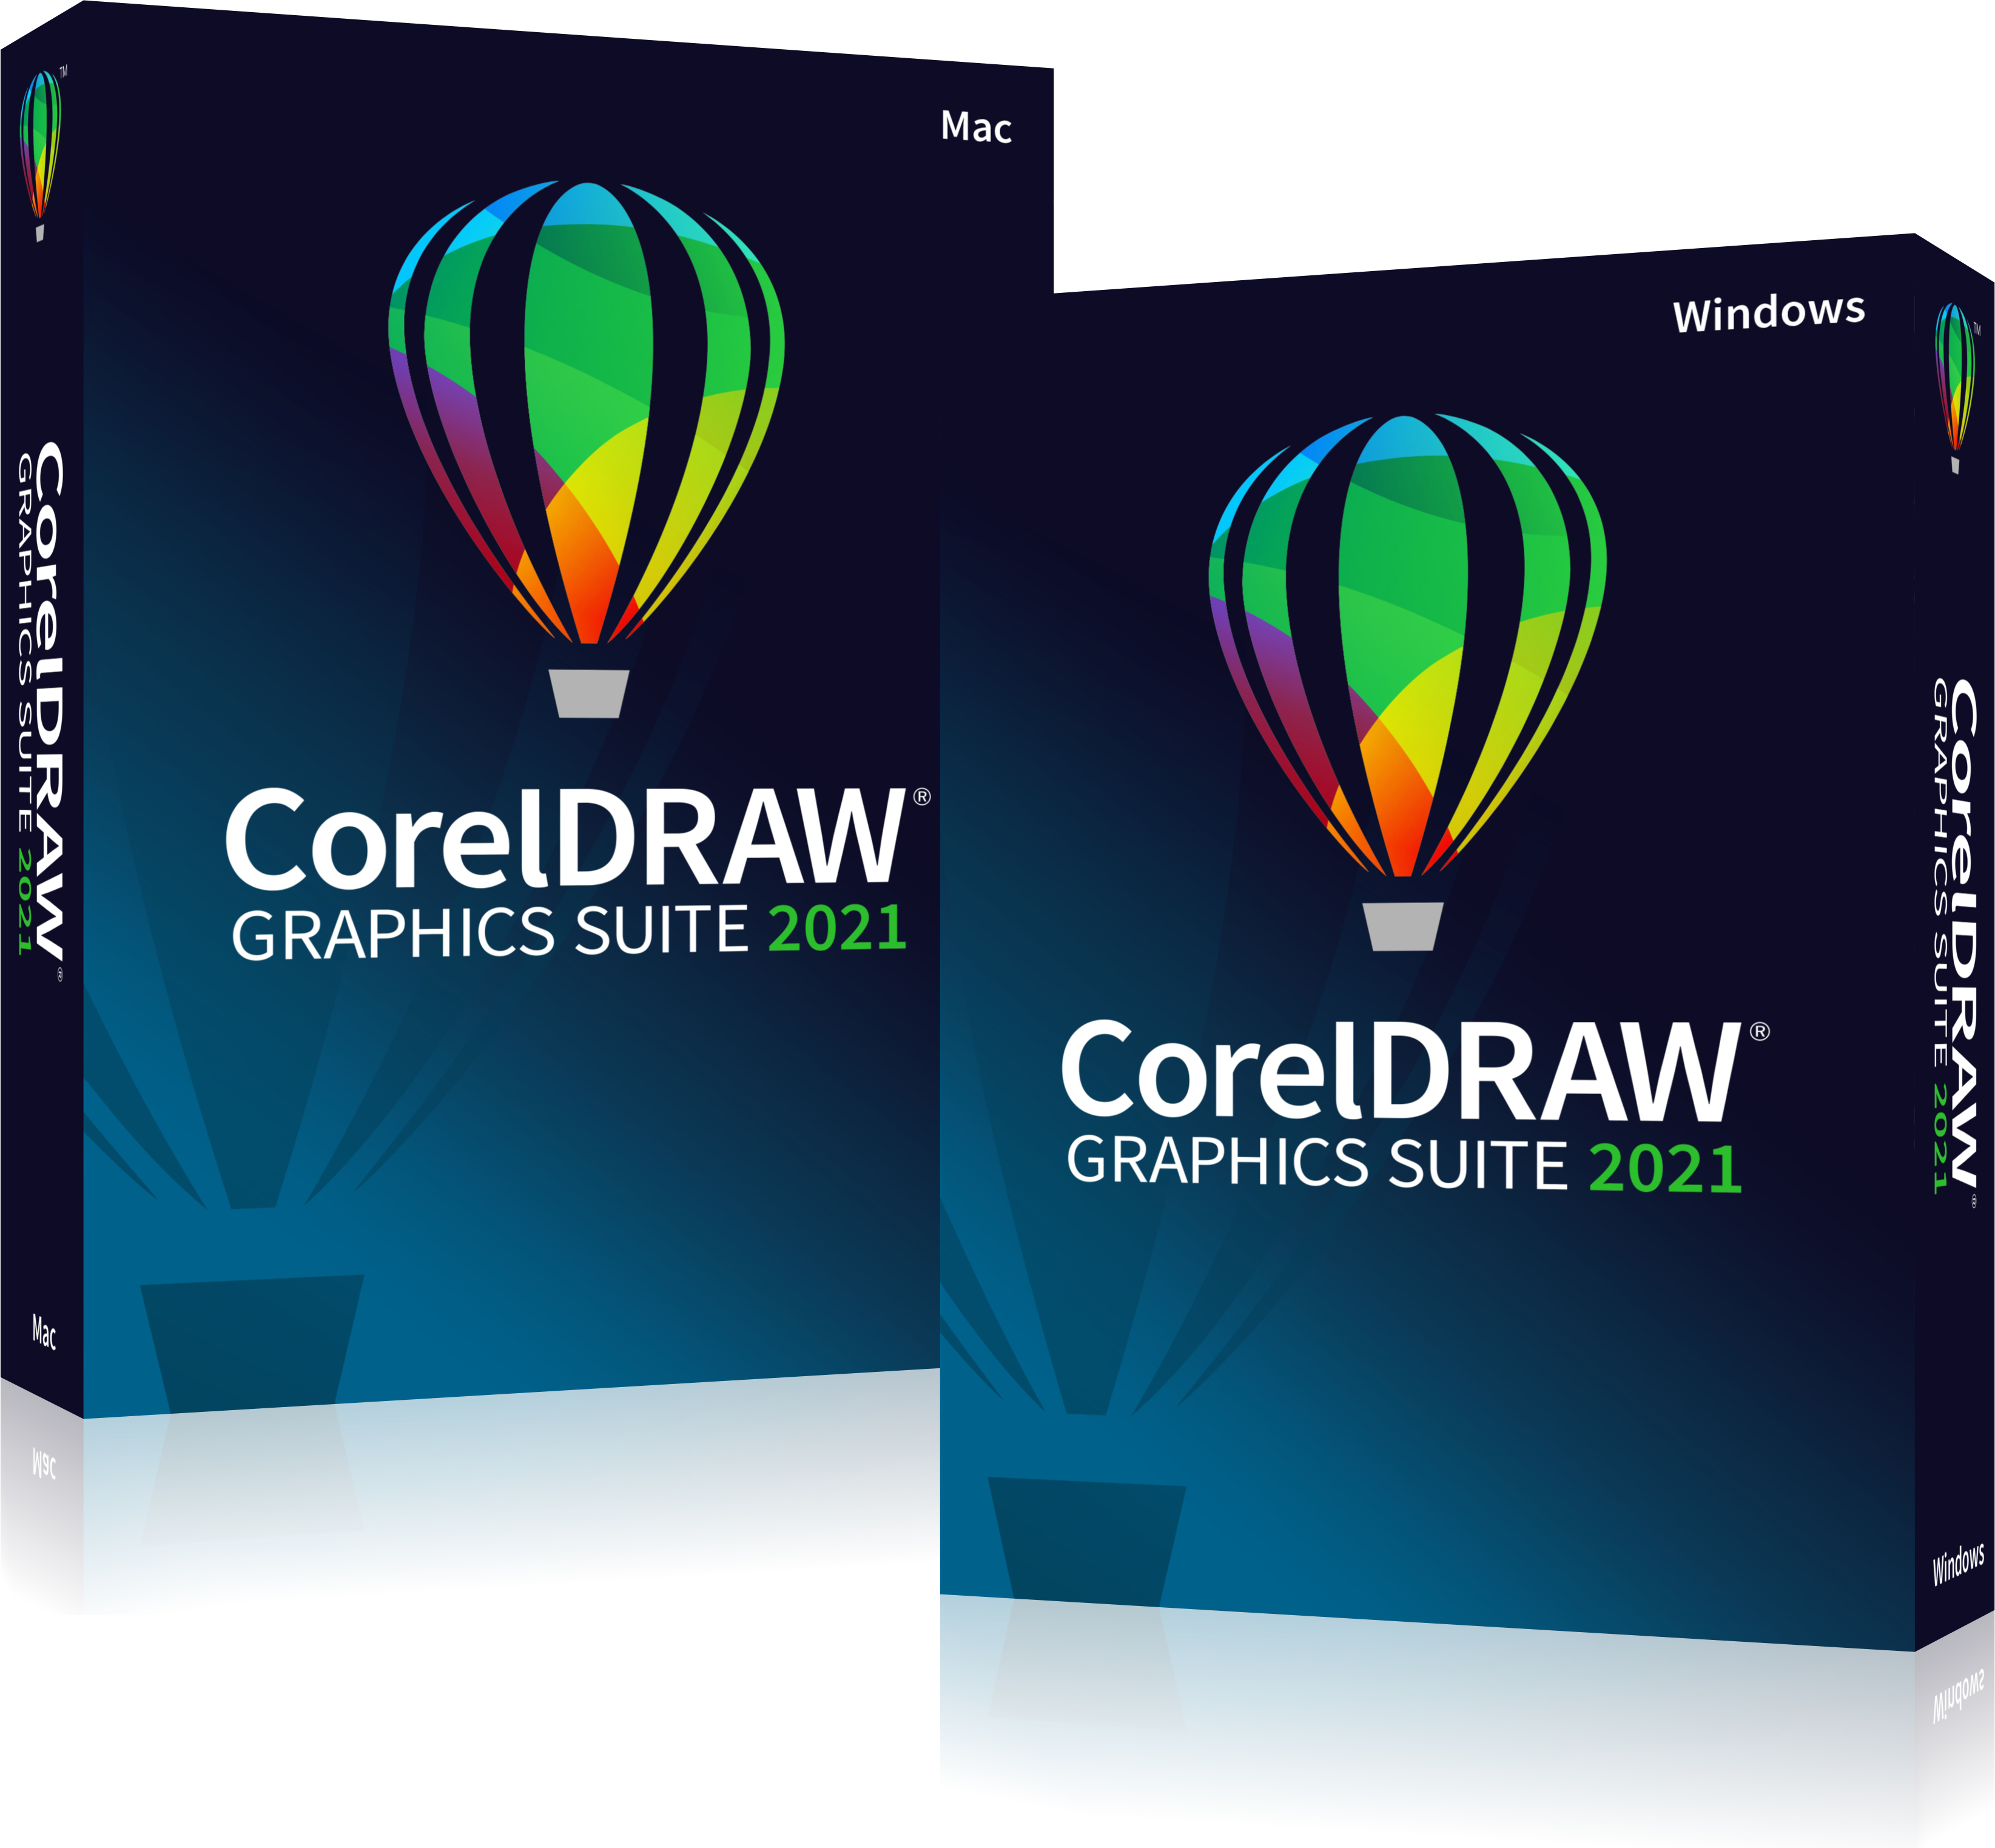 coreldraw-graphics-suite-2021-windows-mac-angebot.png